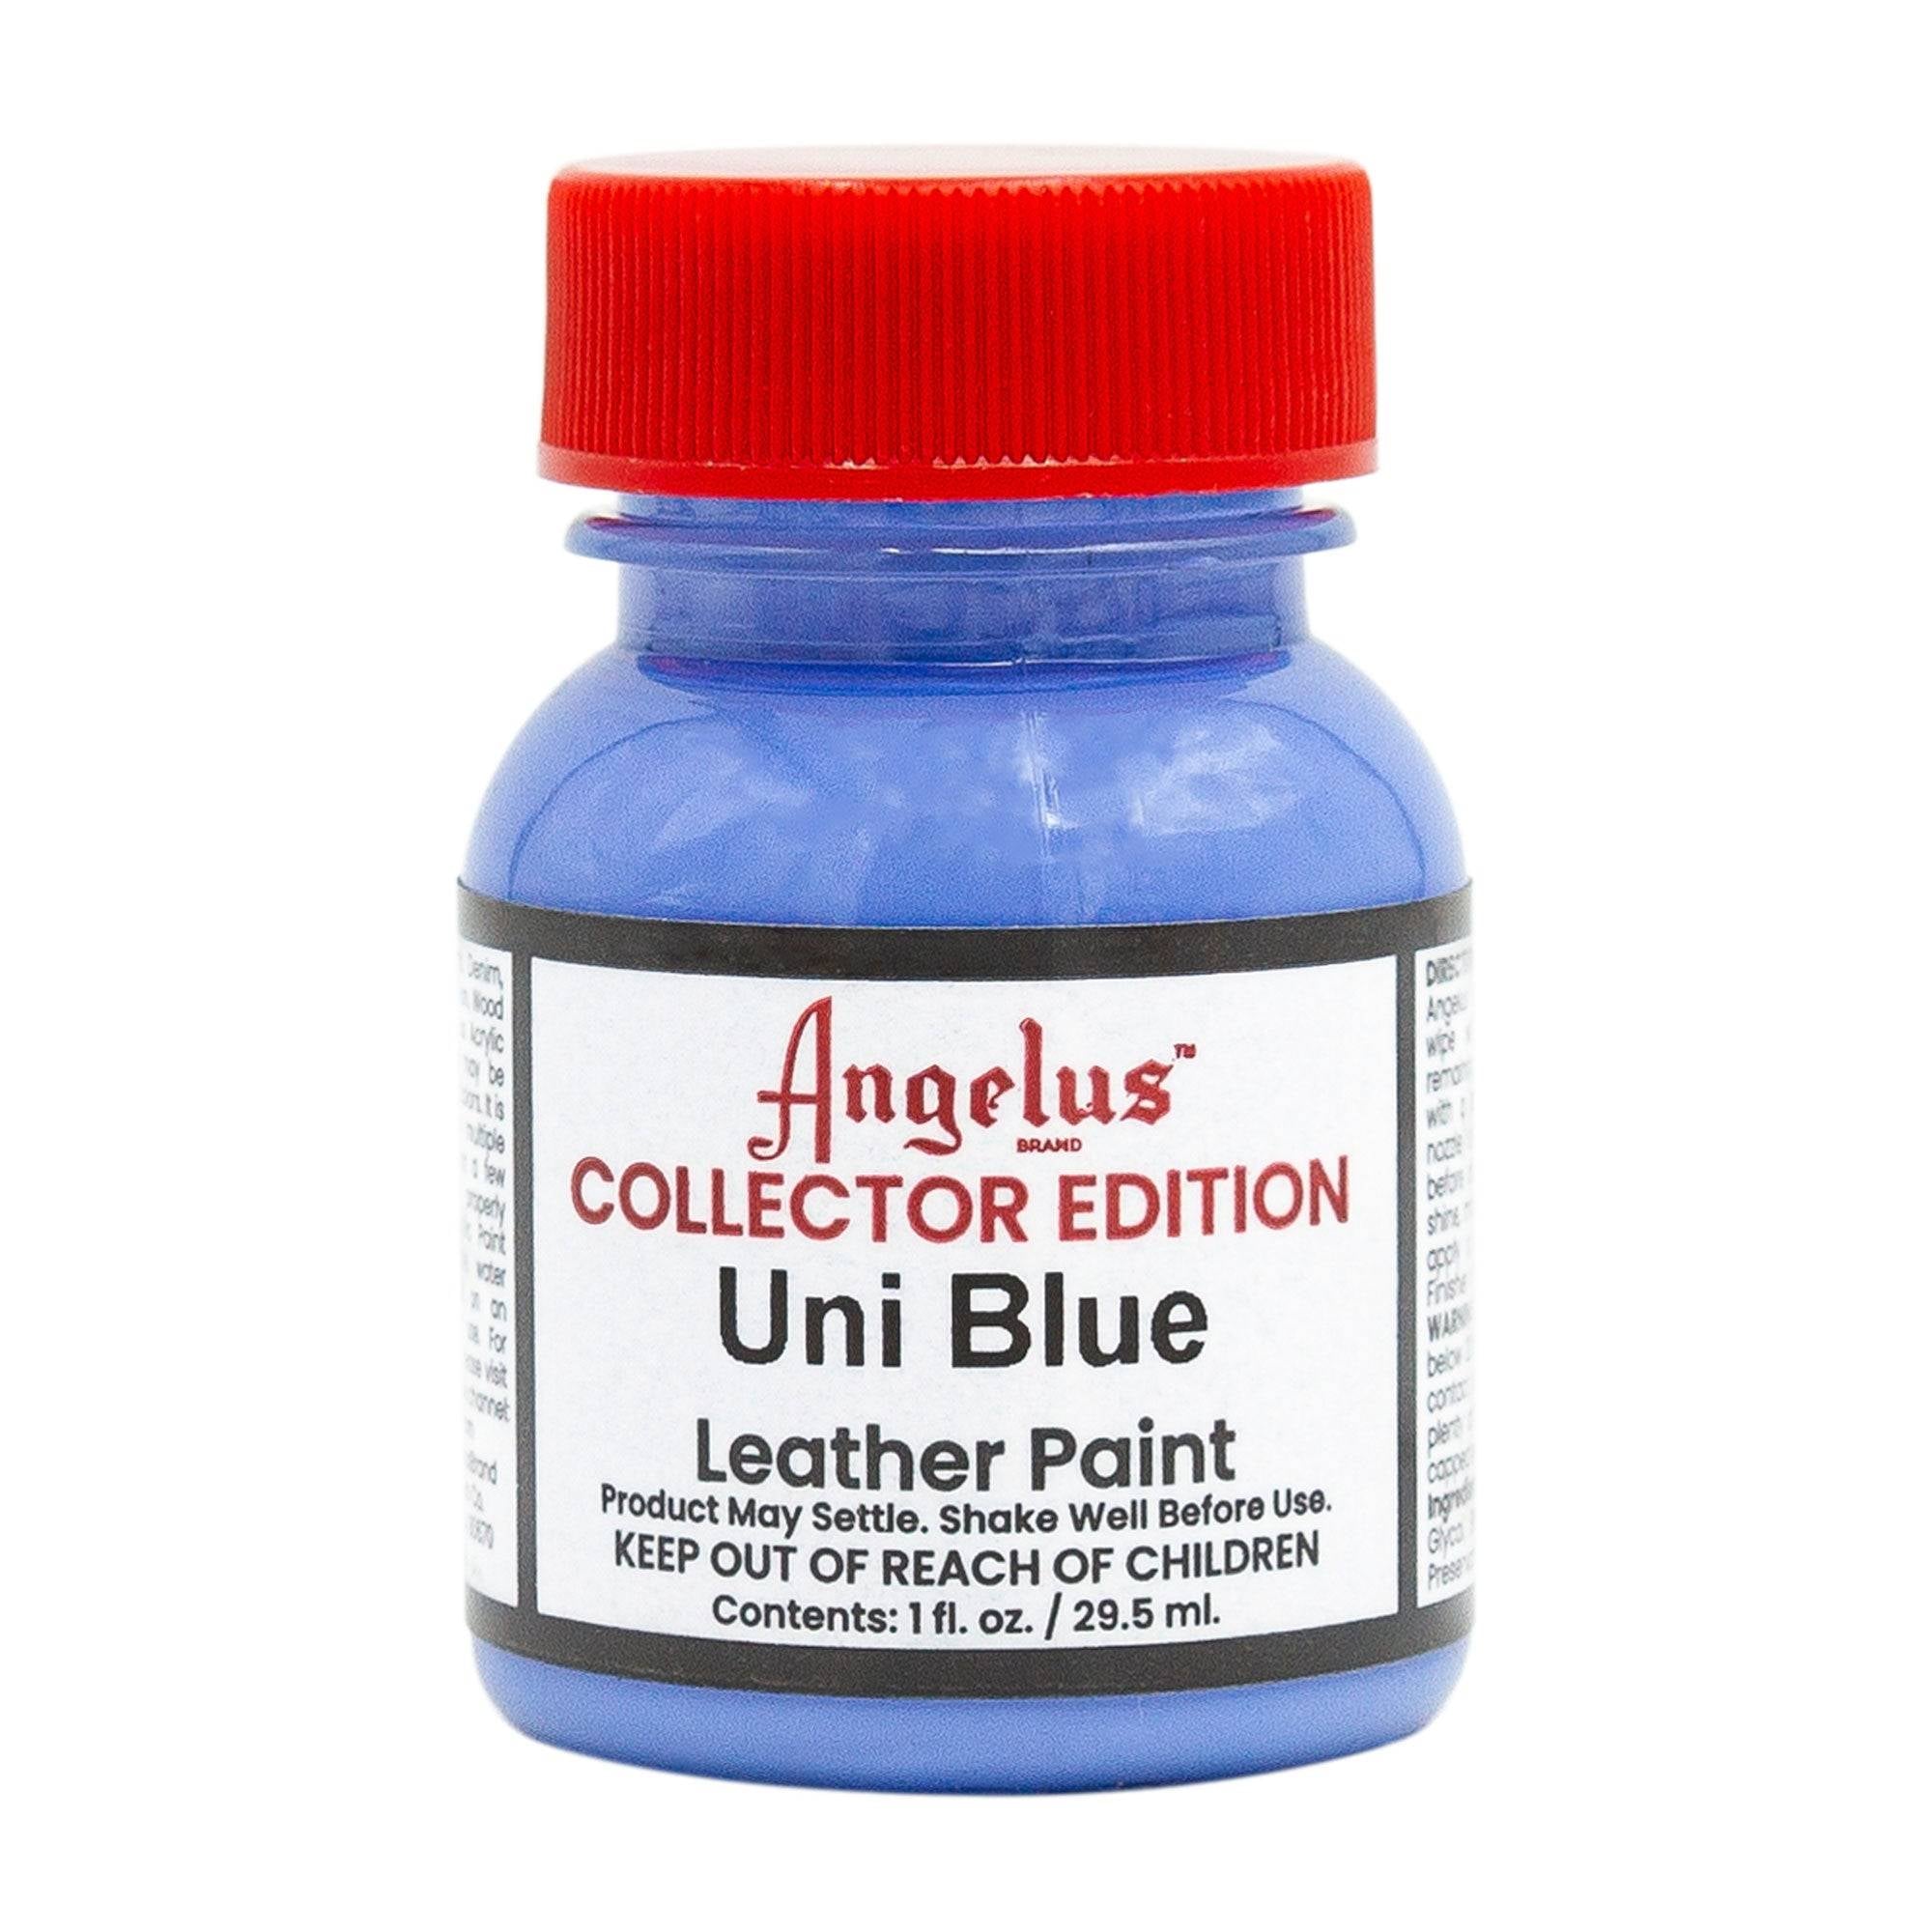 Angelus Leather Paint - Uni Blue (Collector Edition), 1 oz